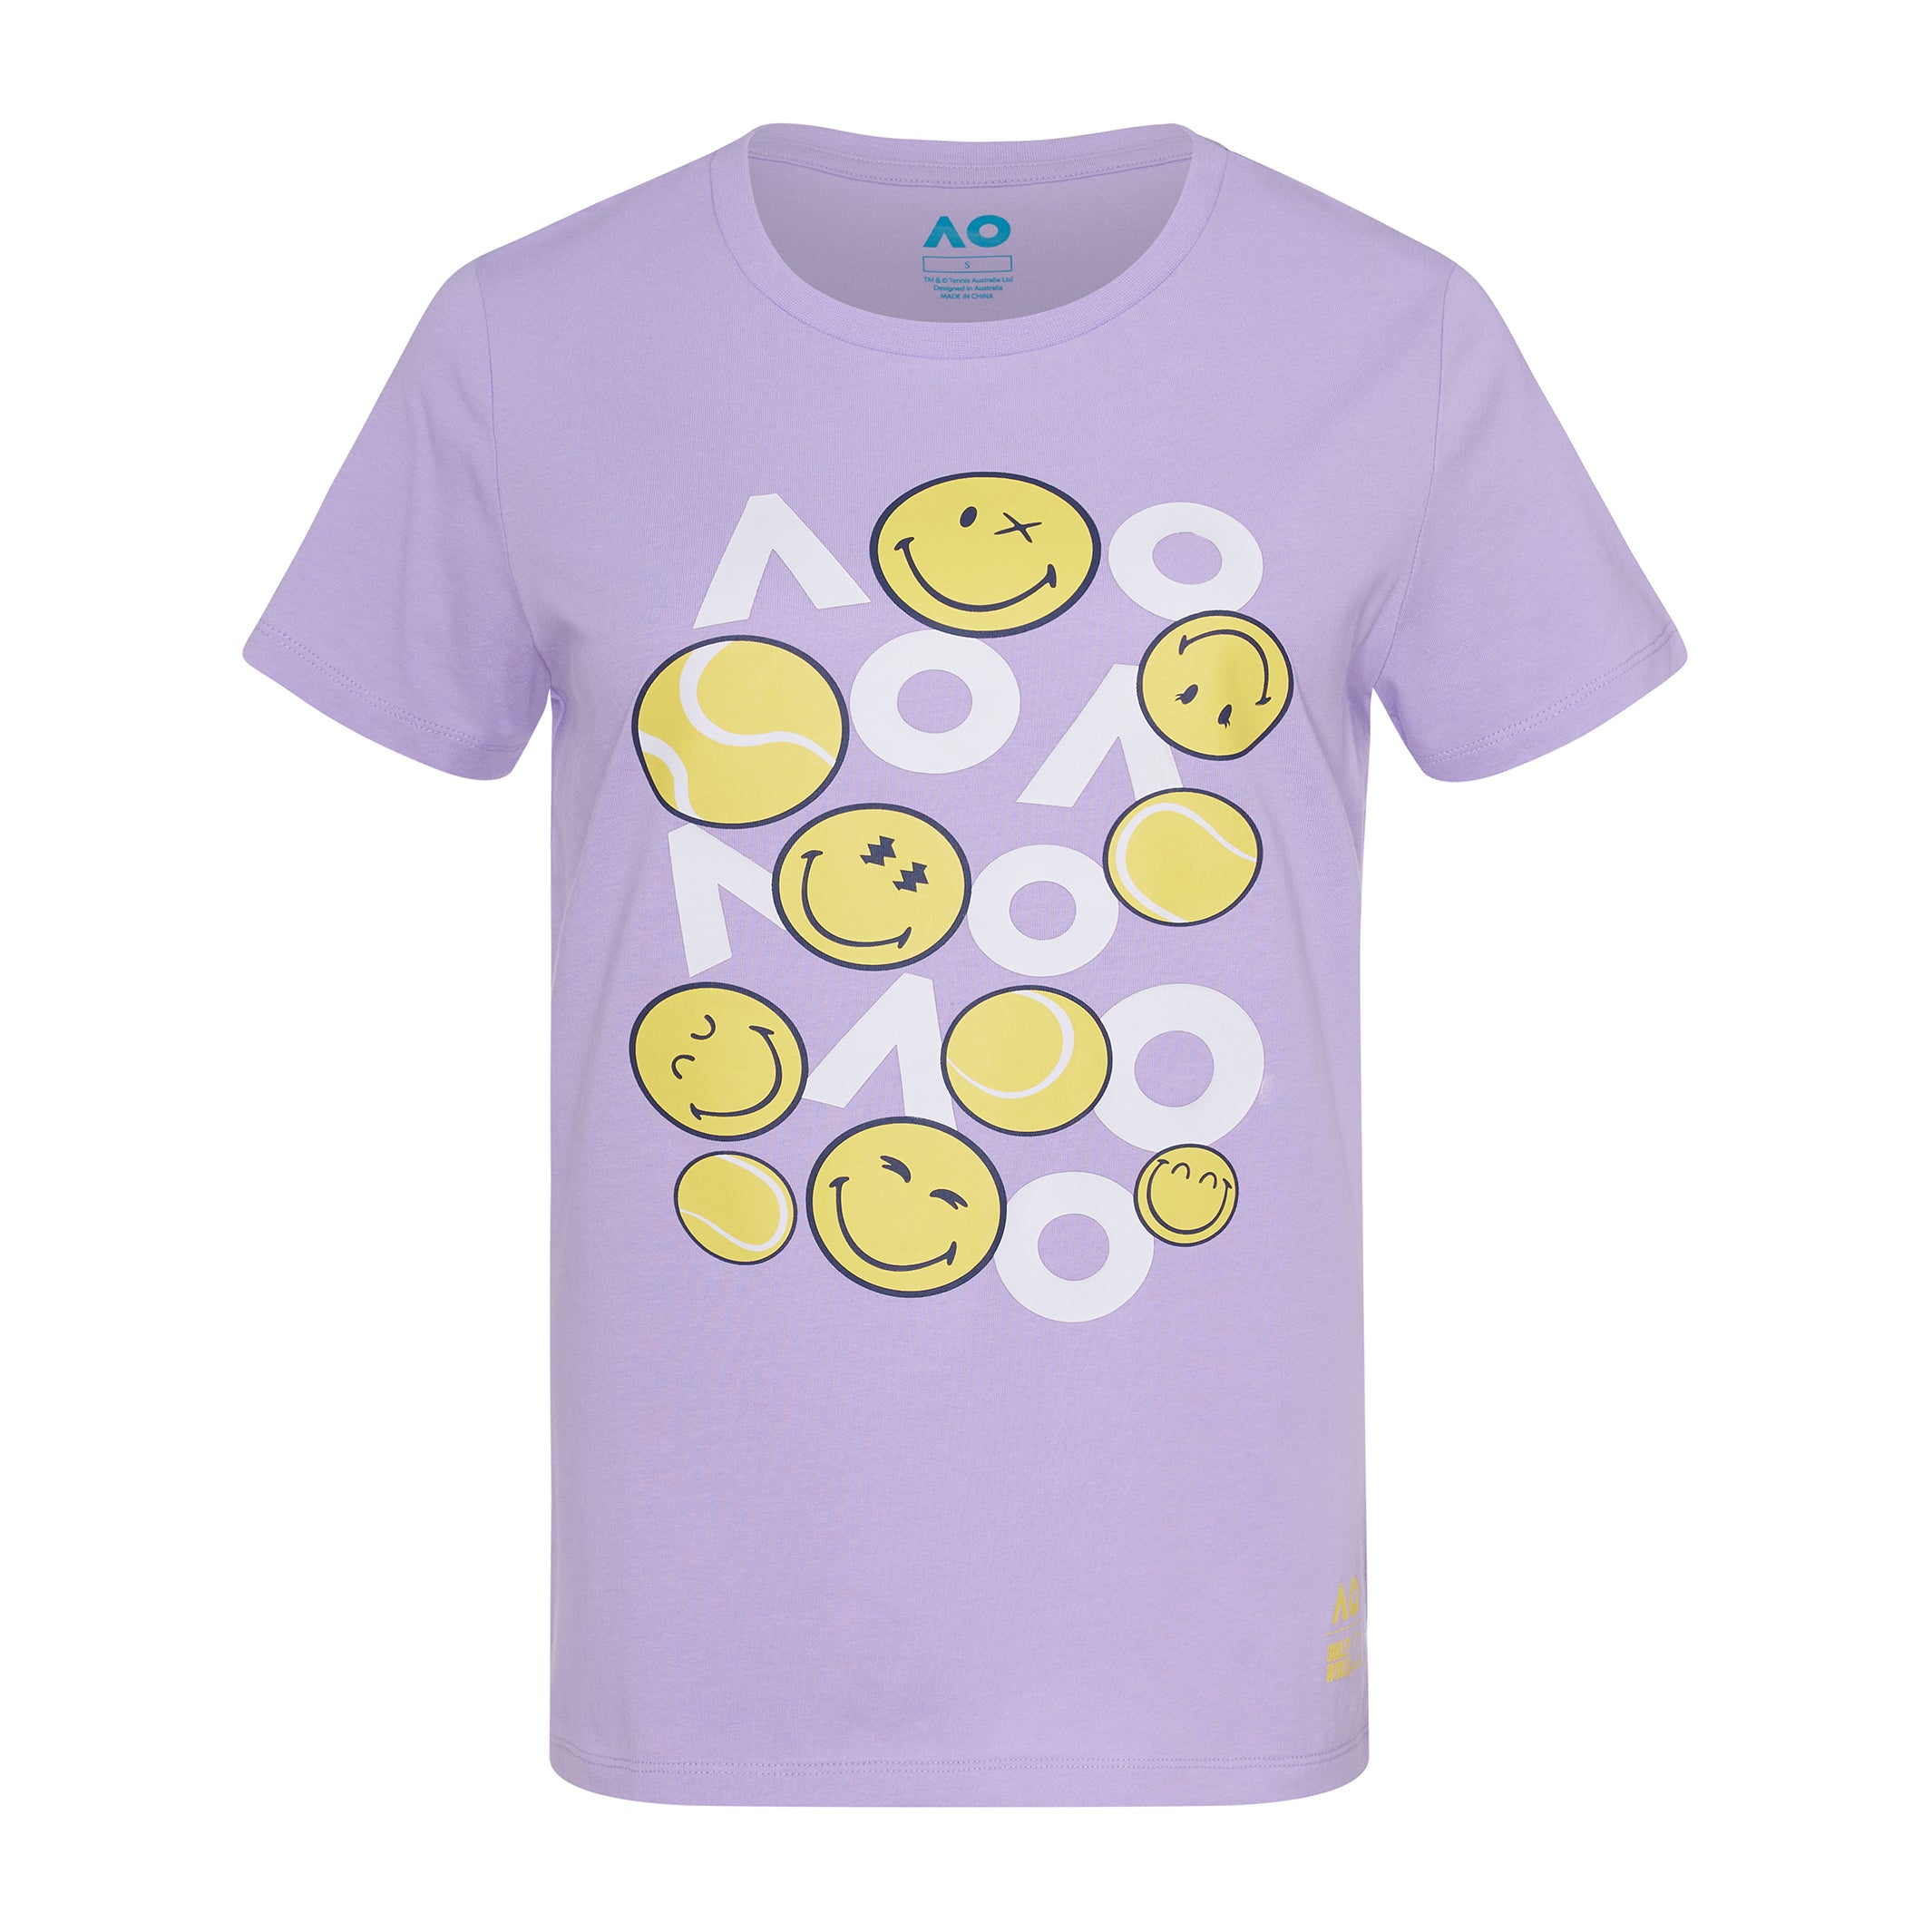 Women's T-Shirt SmileyWorld AO Tennis Balls